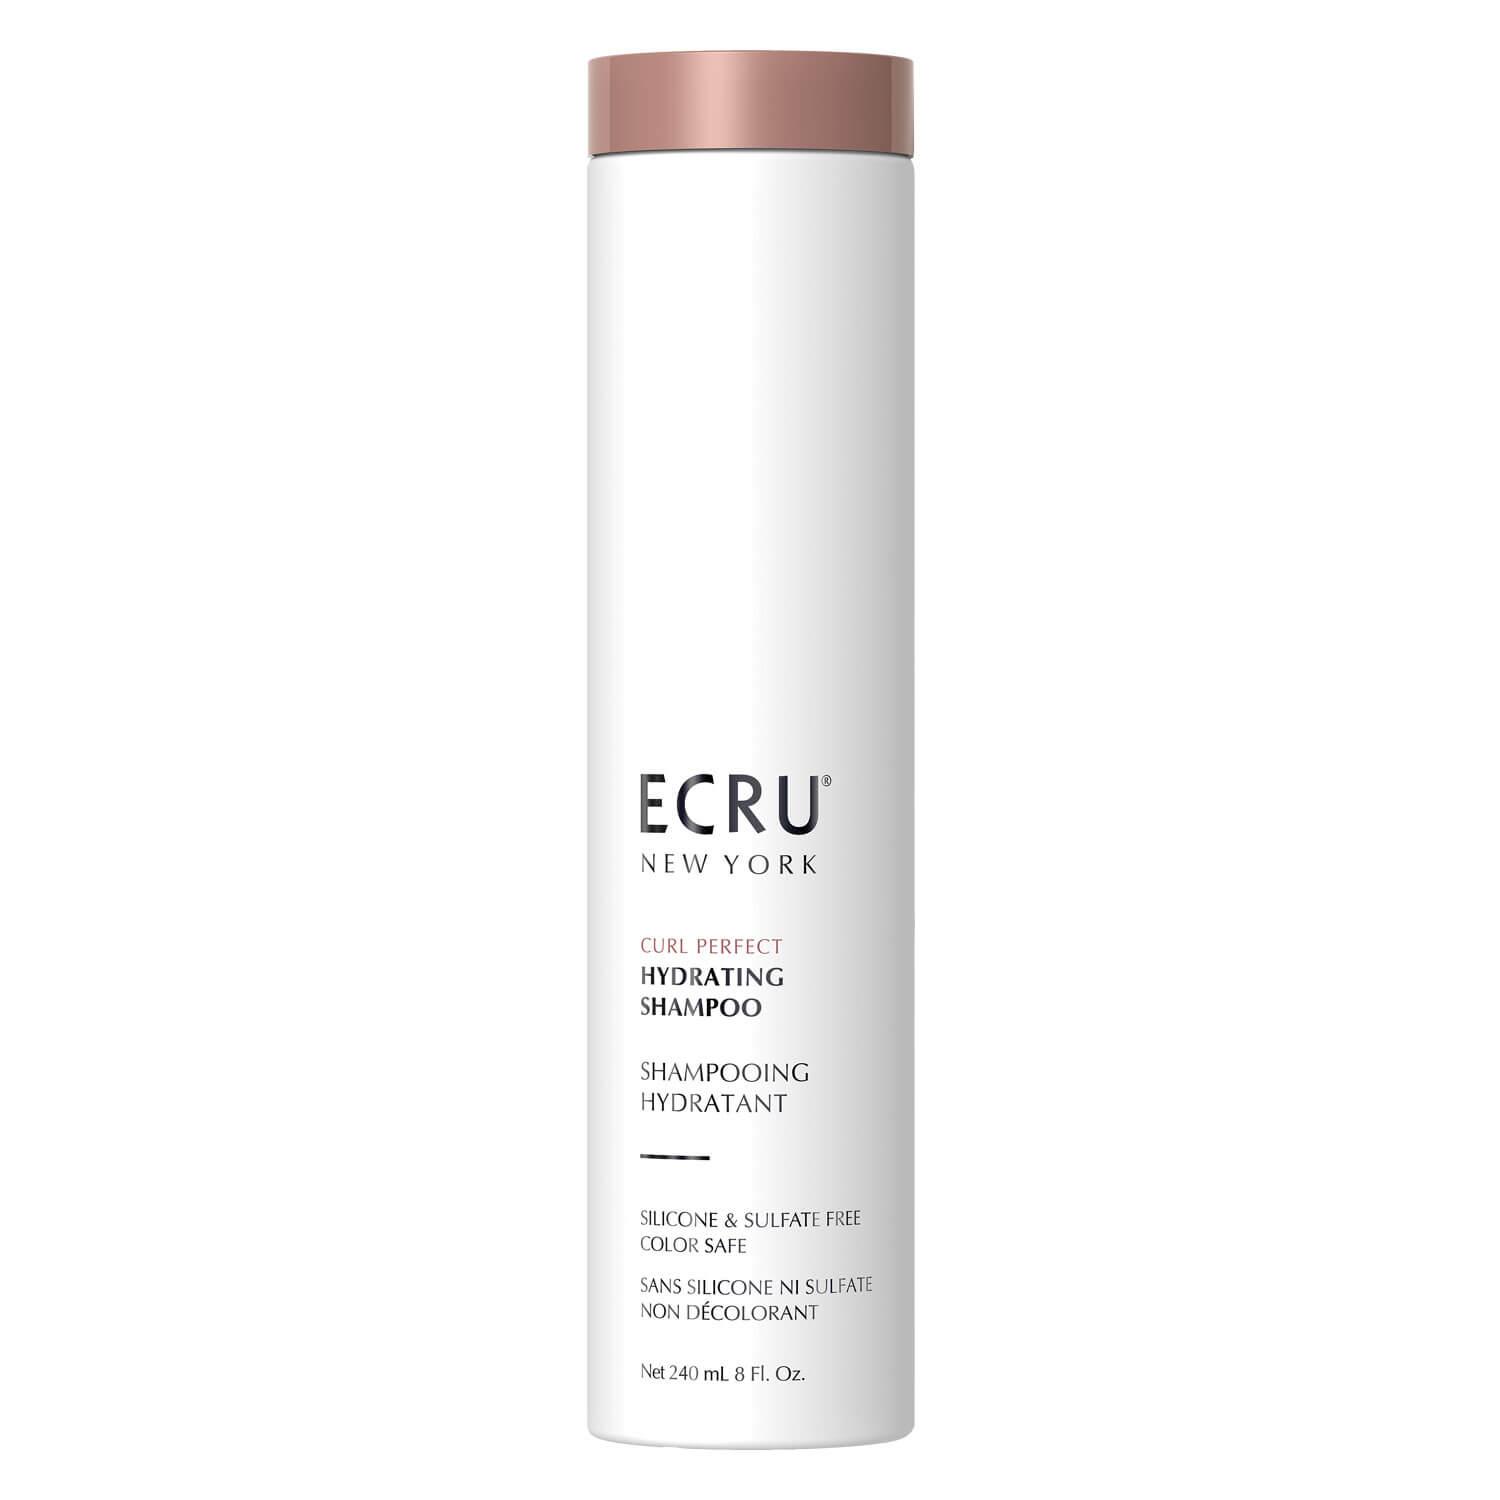 ECRU NY Curl Perfect - Hydrating Shampoo